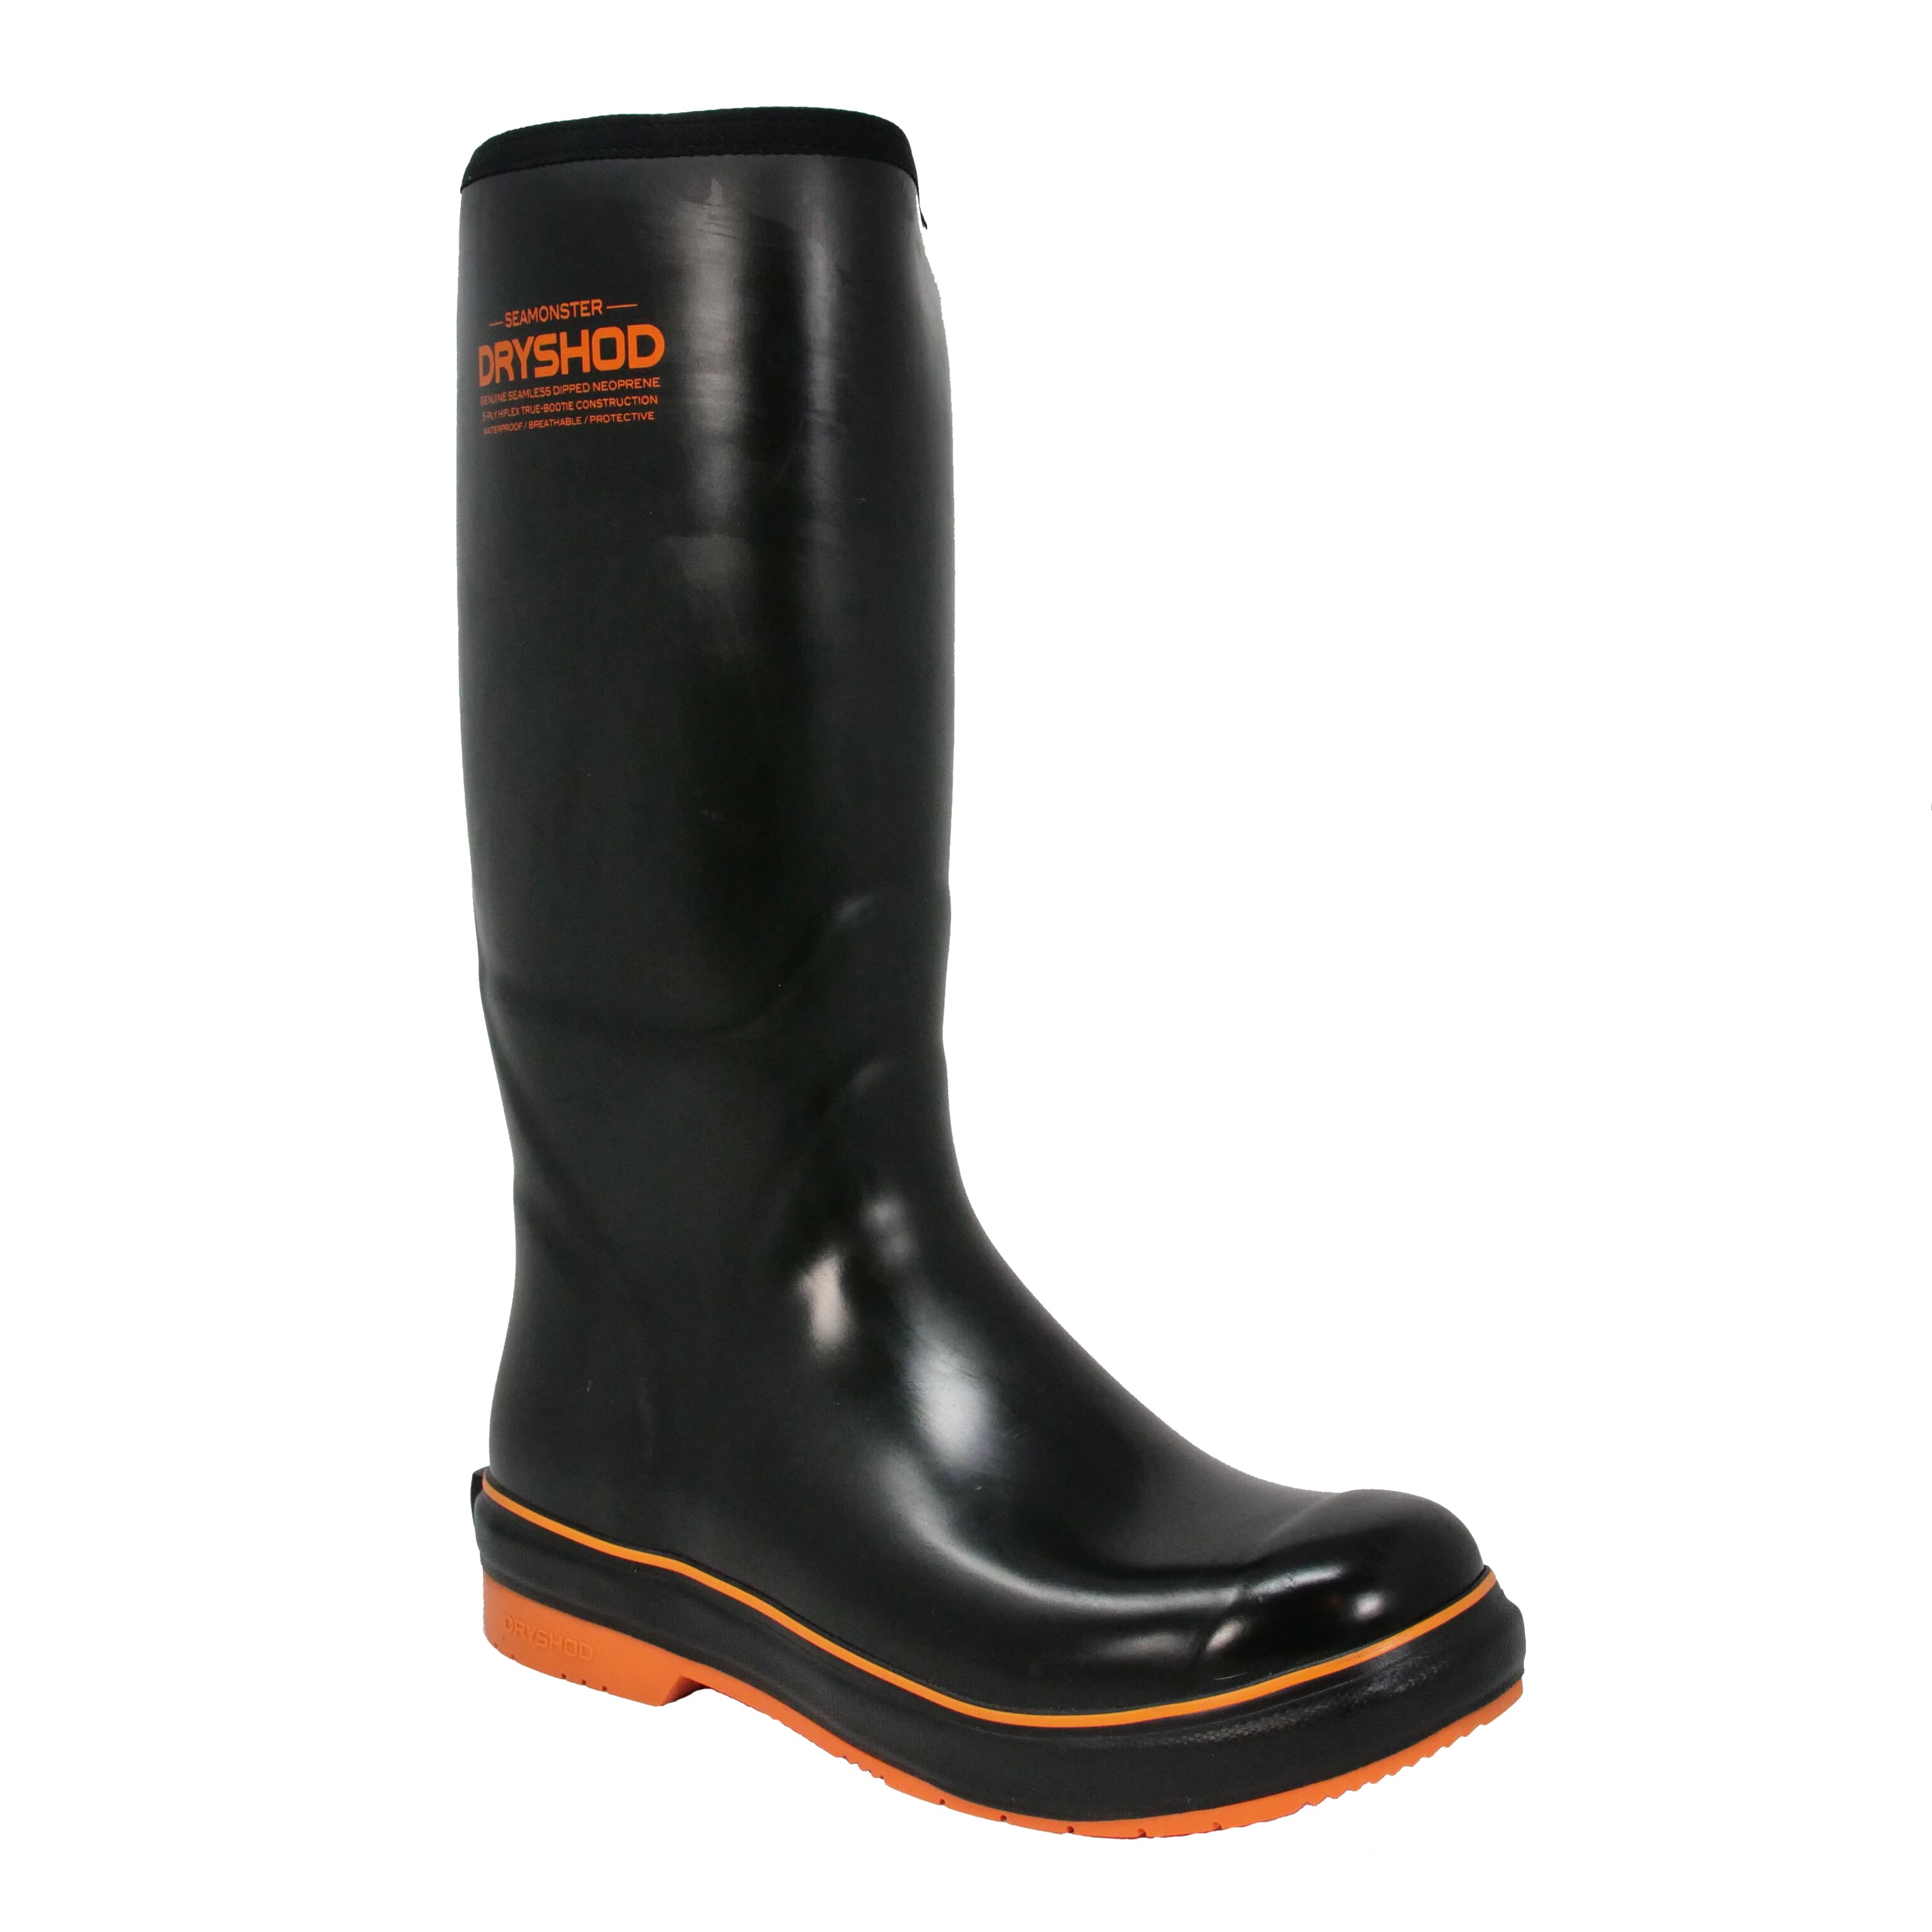 Dryshod SEAMONSTER Black/Orange Boots SEA-MH-BK-M